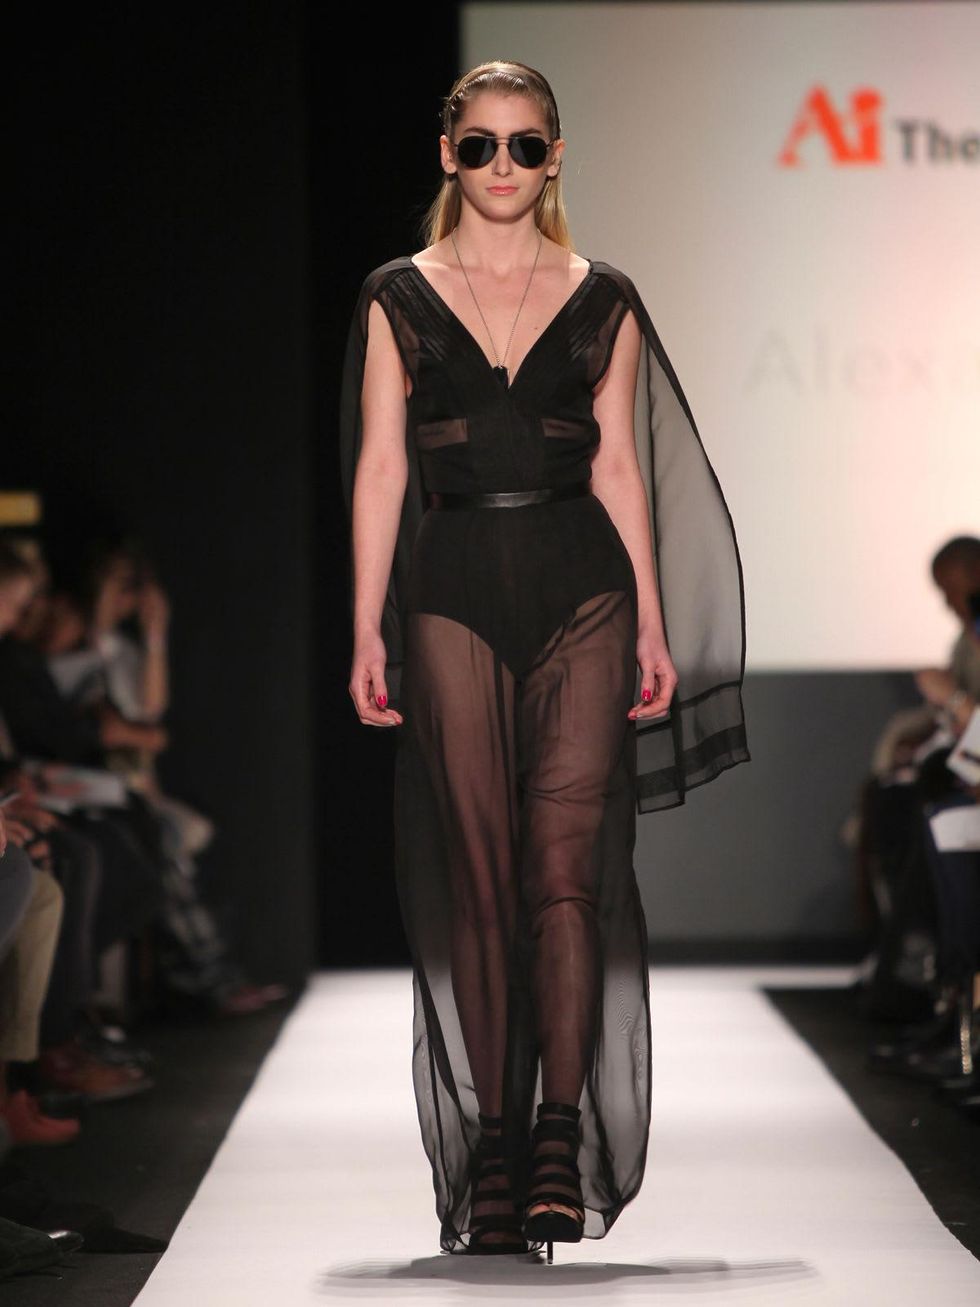 Clifford New York Fashion Week fall 2015 The Art Institutes winners February 2015 Alexa DiBasio - LOOK 6